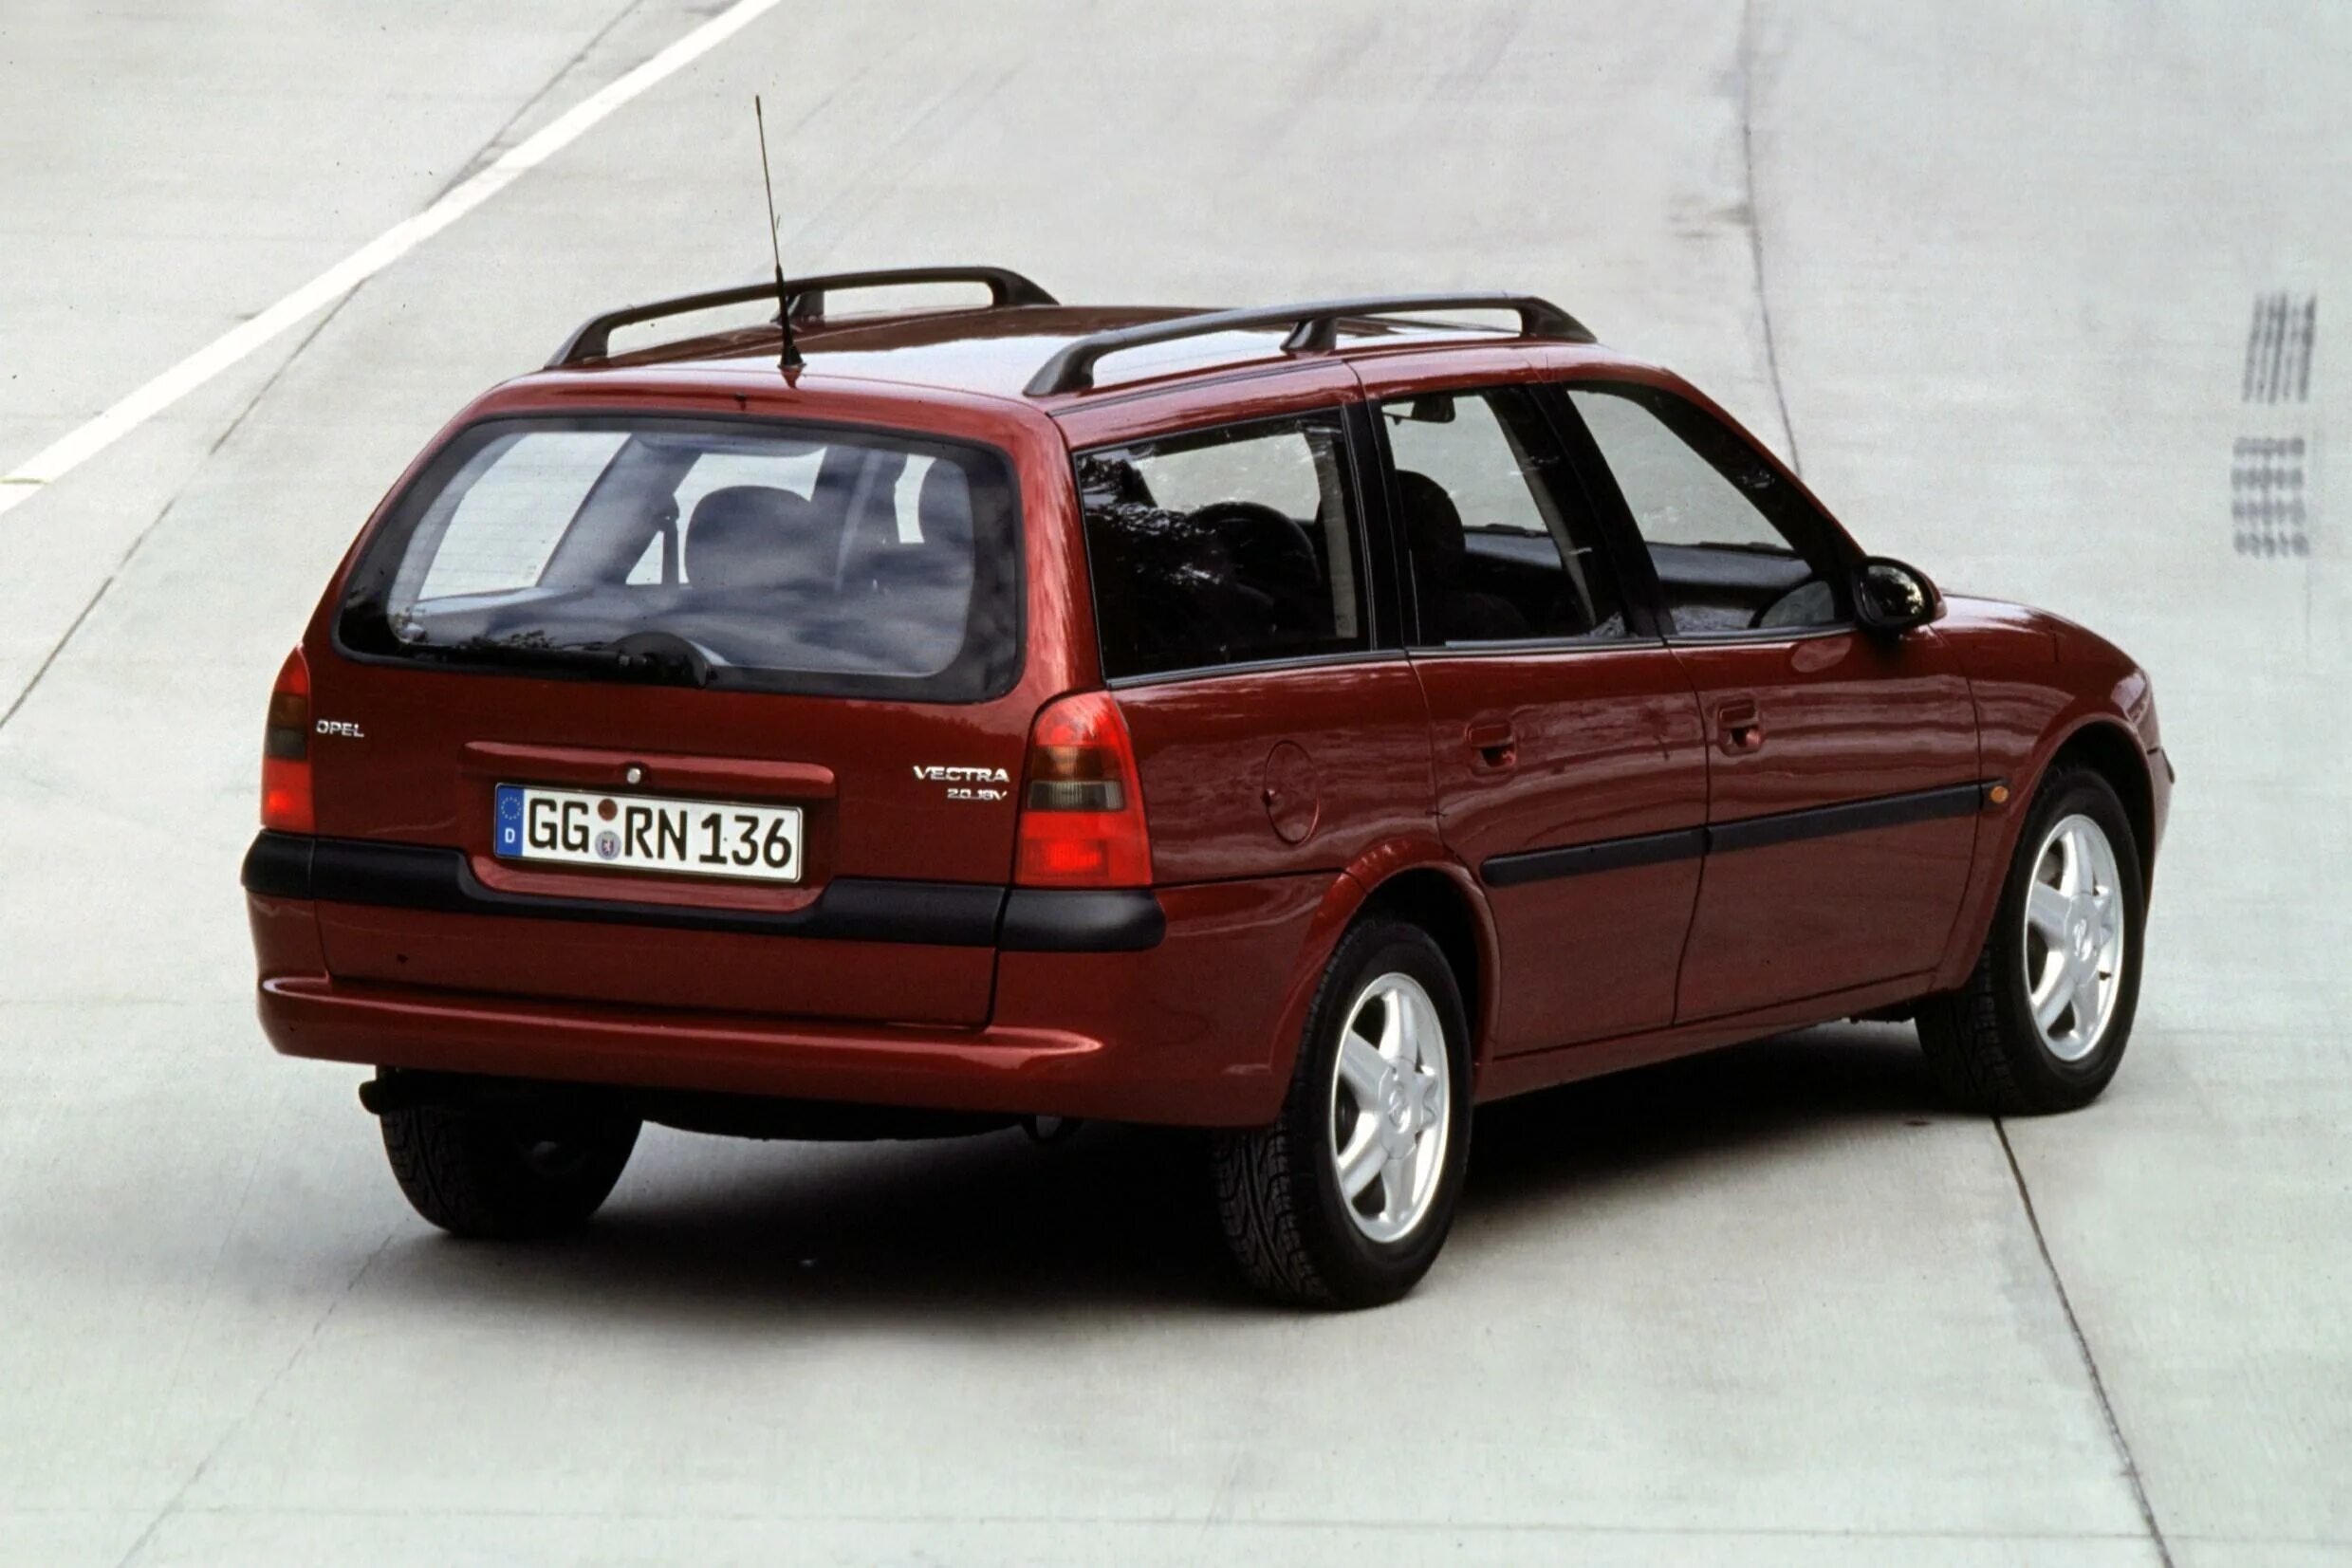 Опель караван универсал. Опель Вектра Караван 1998 универсал. Opel Vectra b Caravan 1998. Opel Vectra универсал 1999. Опель Вектра Караван 2000.